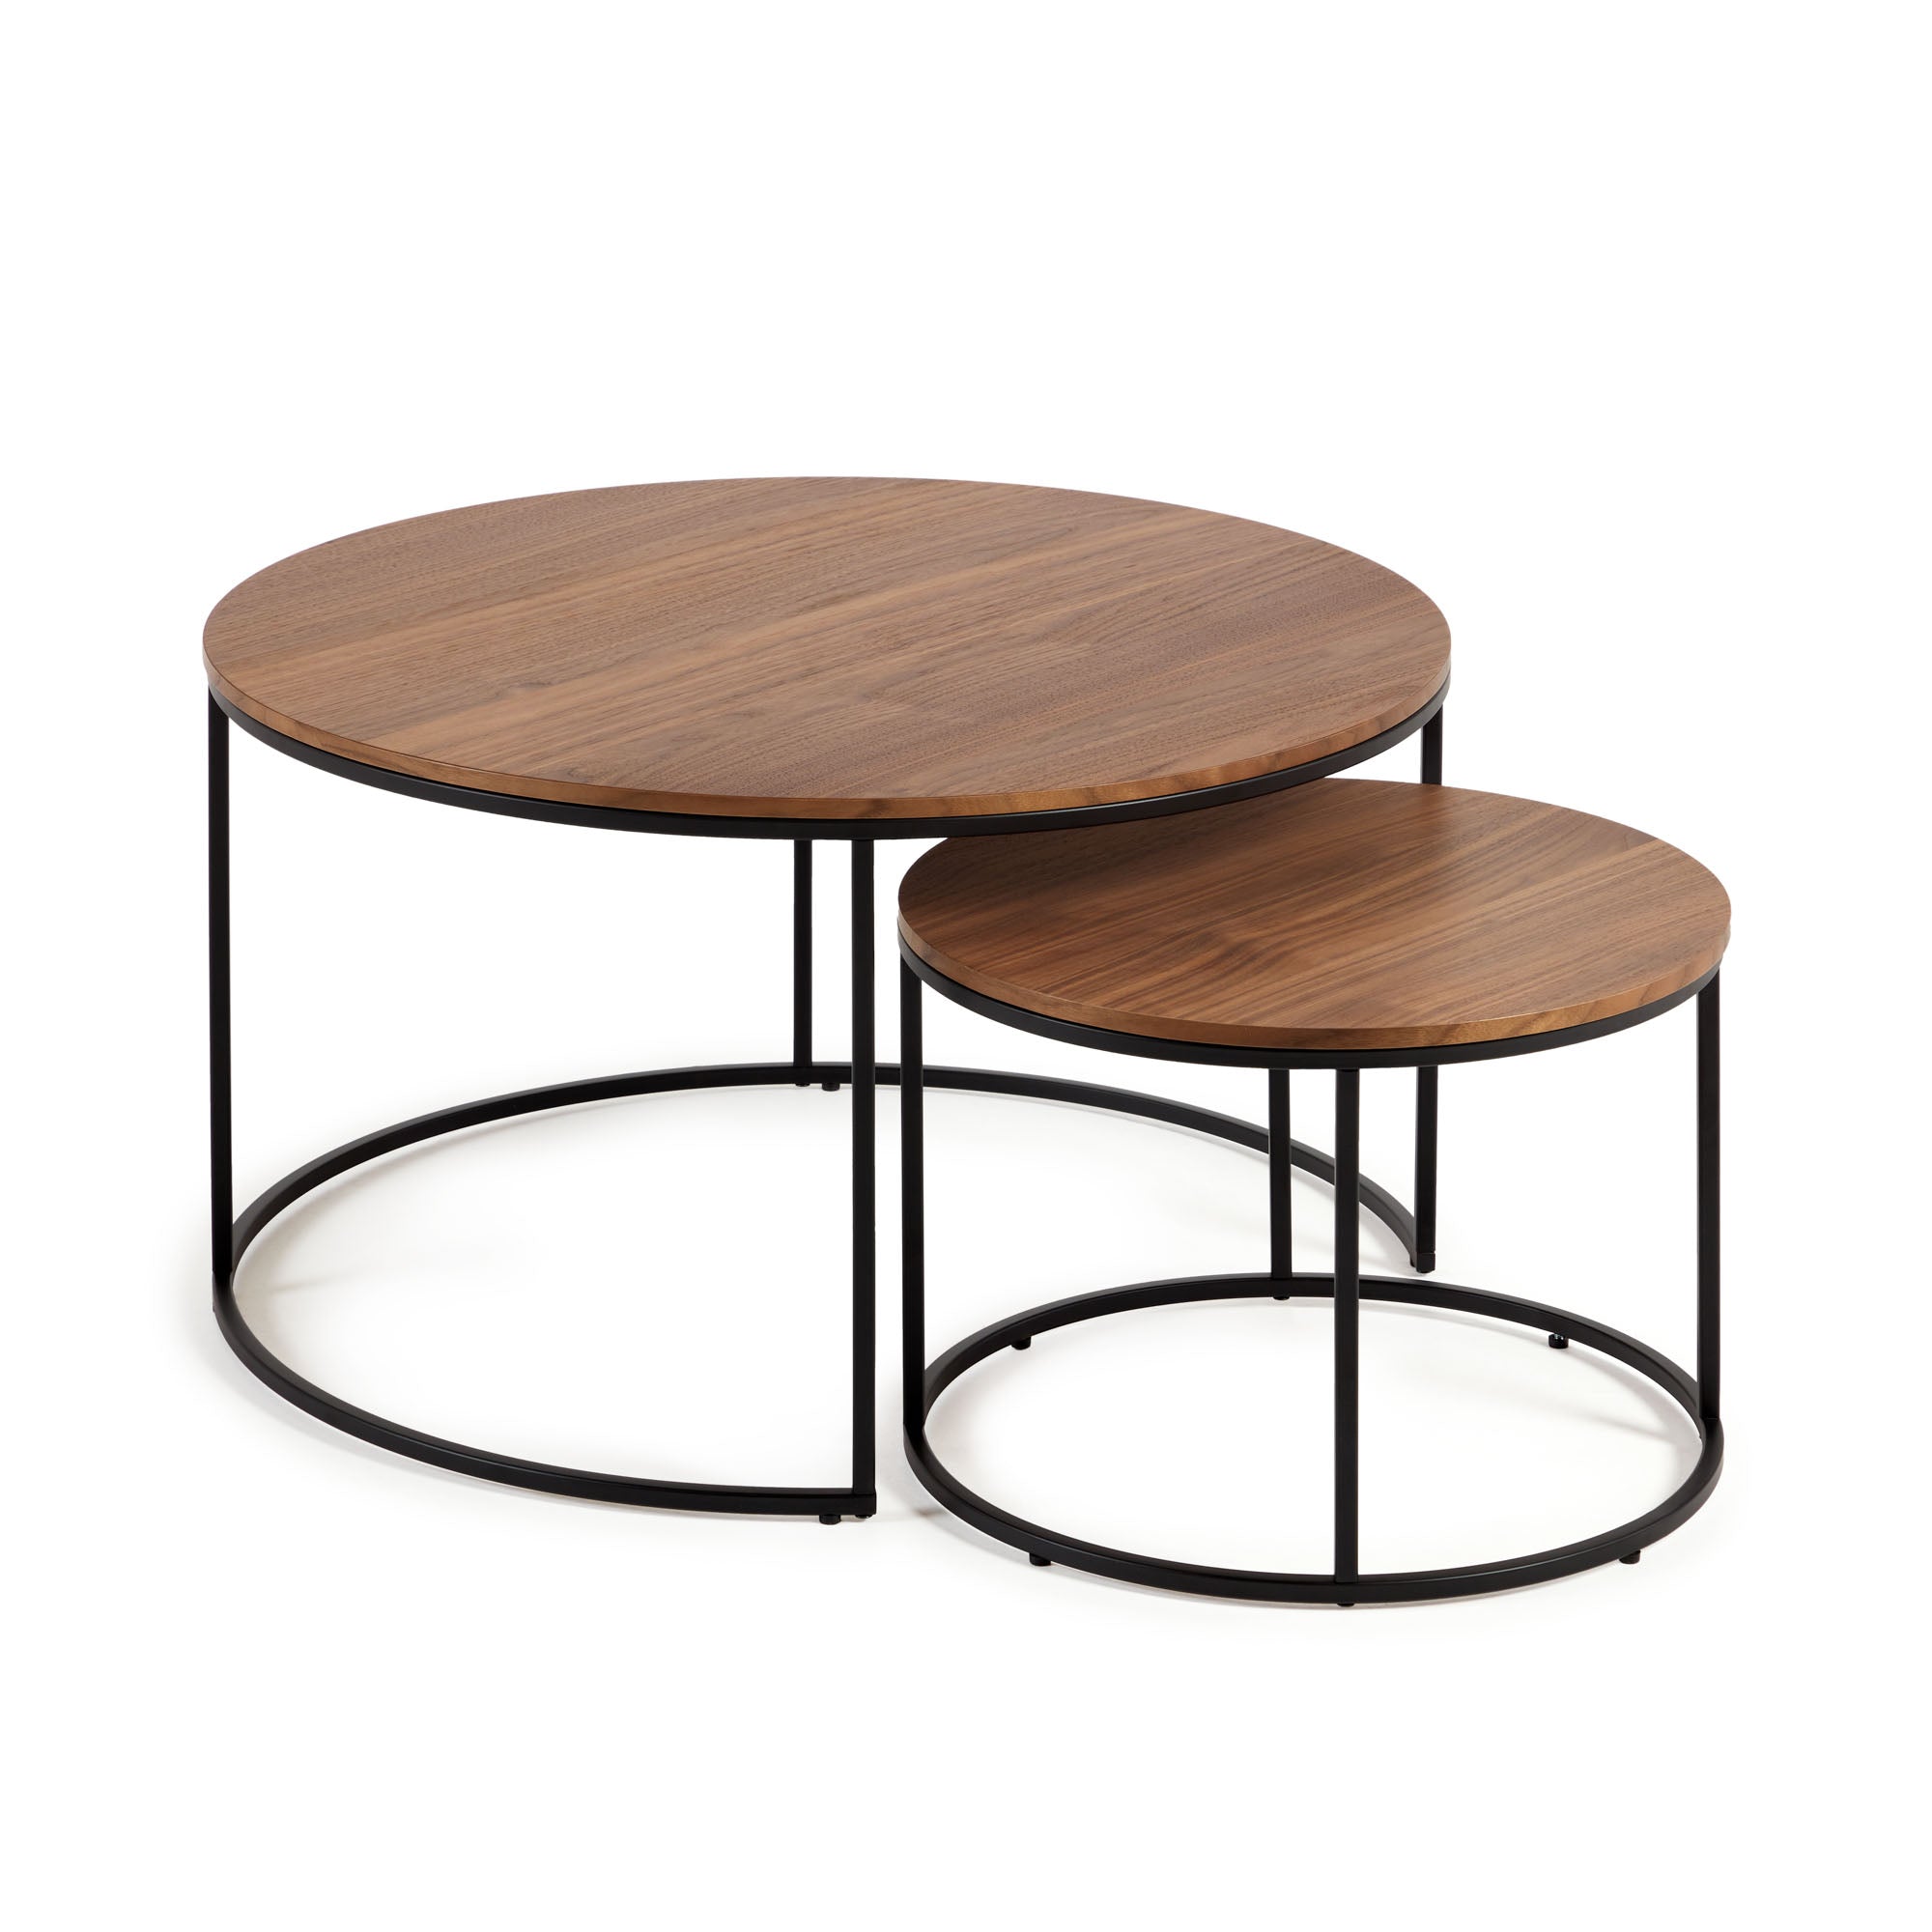 Yoana set of 2 nesting side tables with walnut veneer and black metal, Ø 80 cm / Ø 50 cm